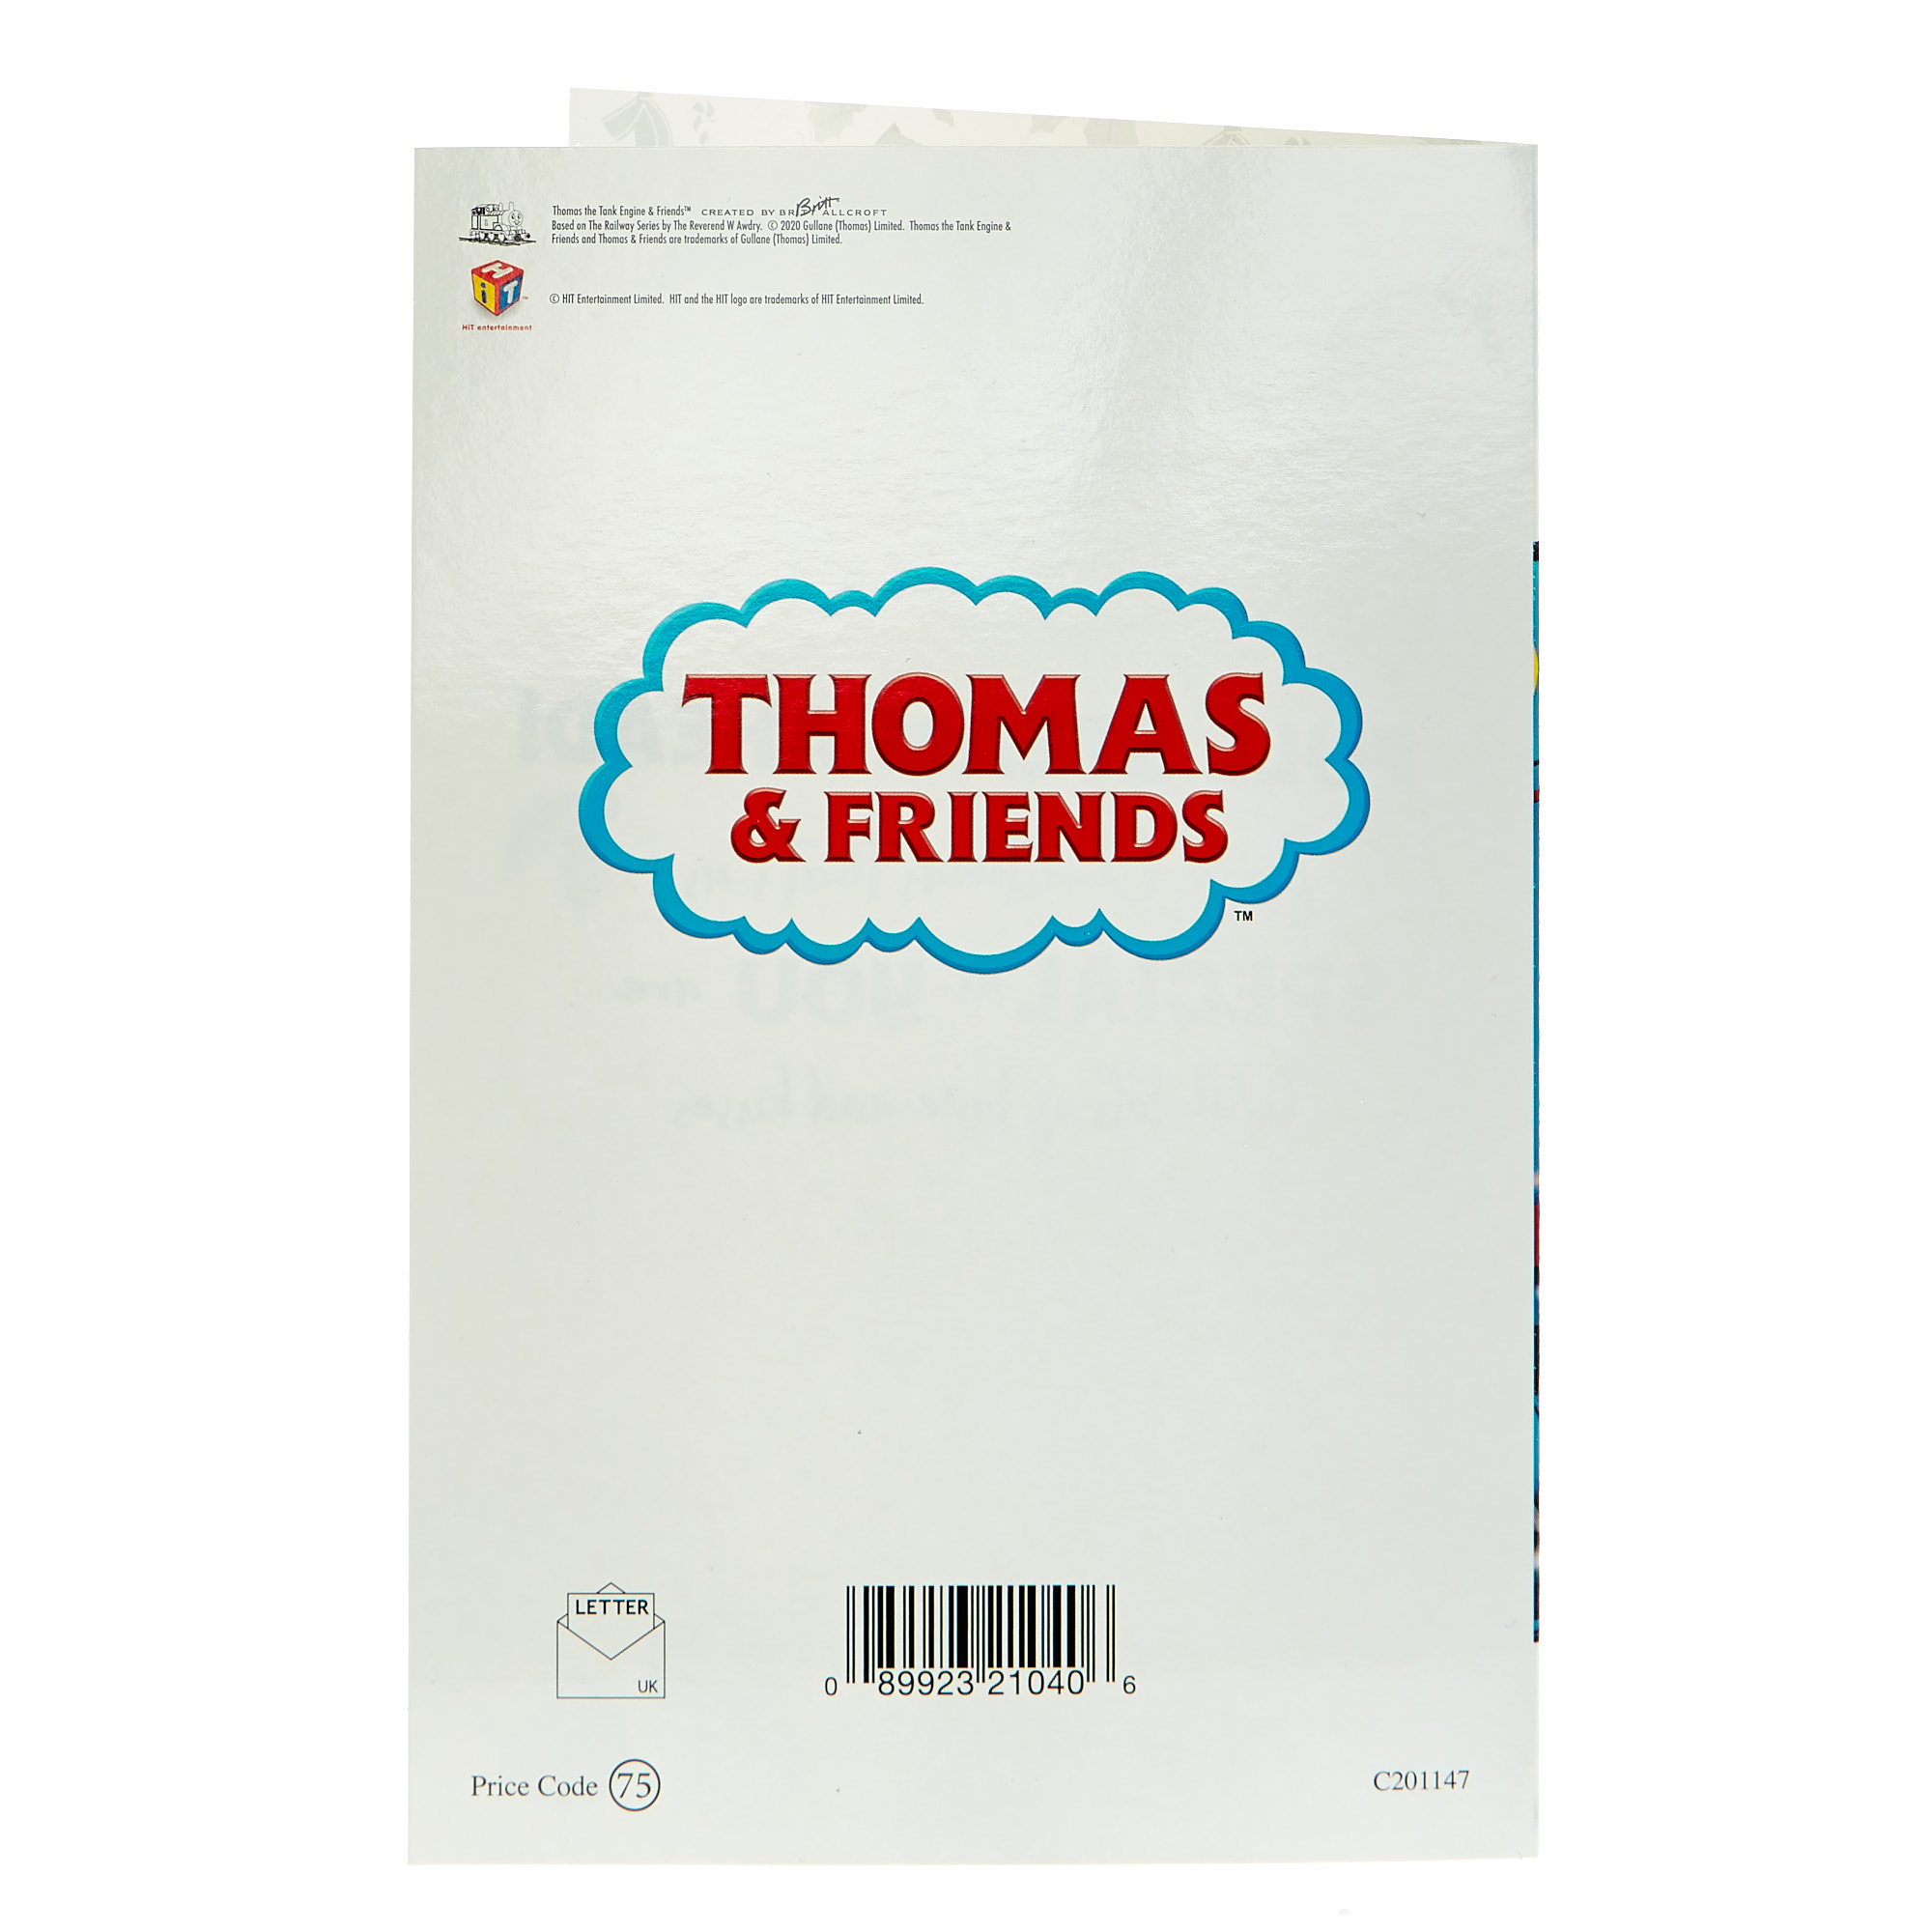 Thomas & Friends Christmas Card - Grandson